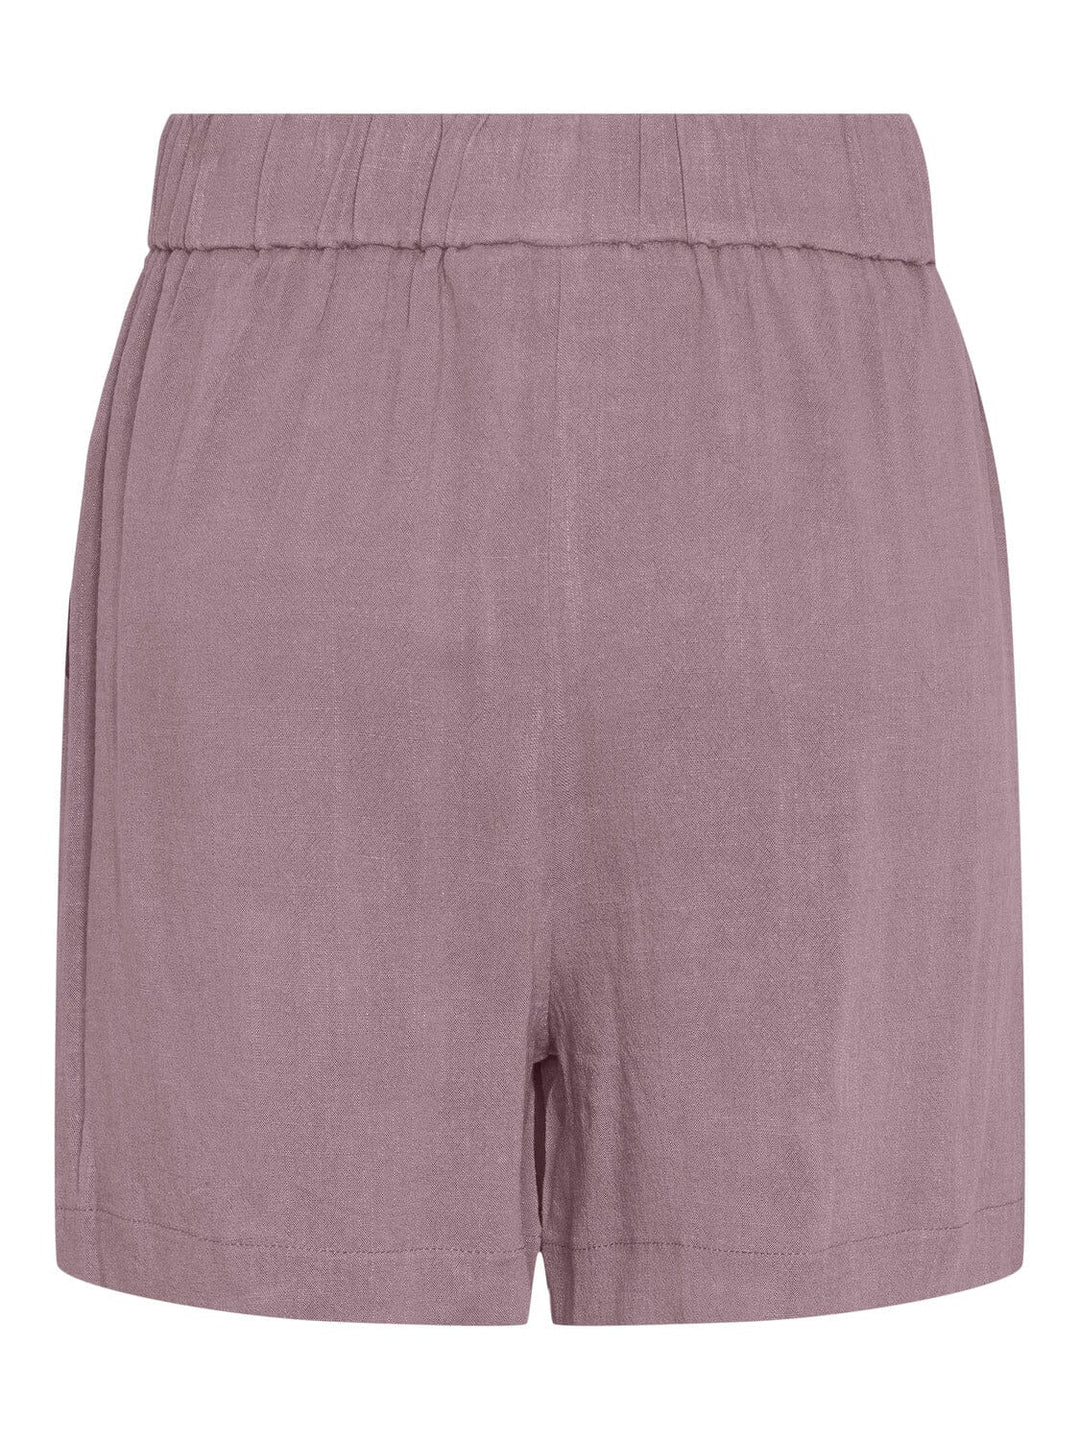 Pieces, Pcvinsty Hw Linen Shorts, Woodrose